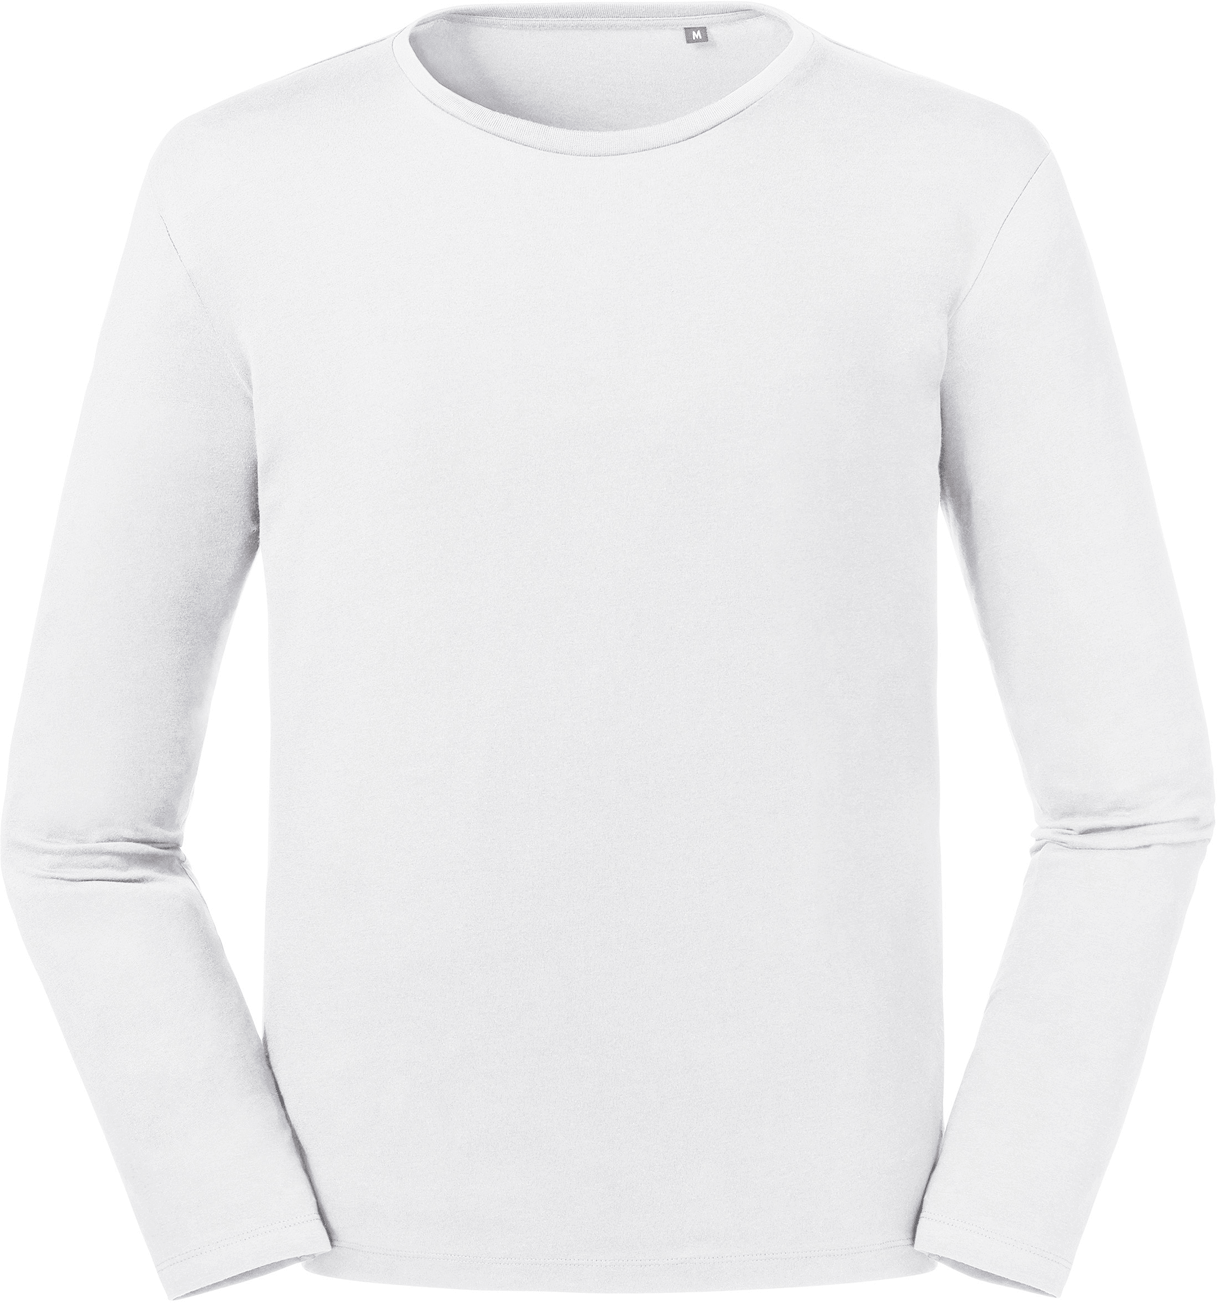 Russell Pure Organic Langarm T-Shirt, white, 2XL